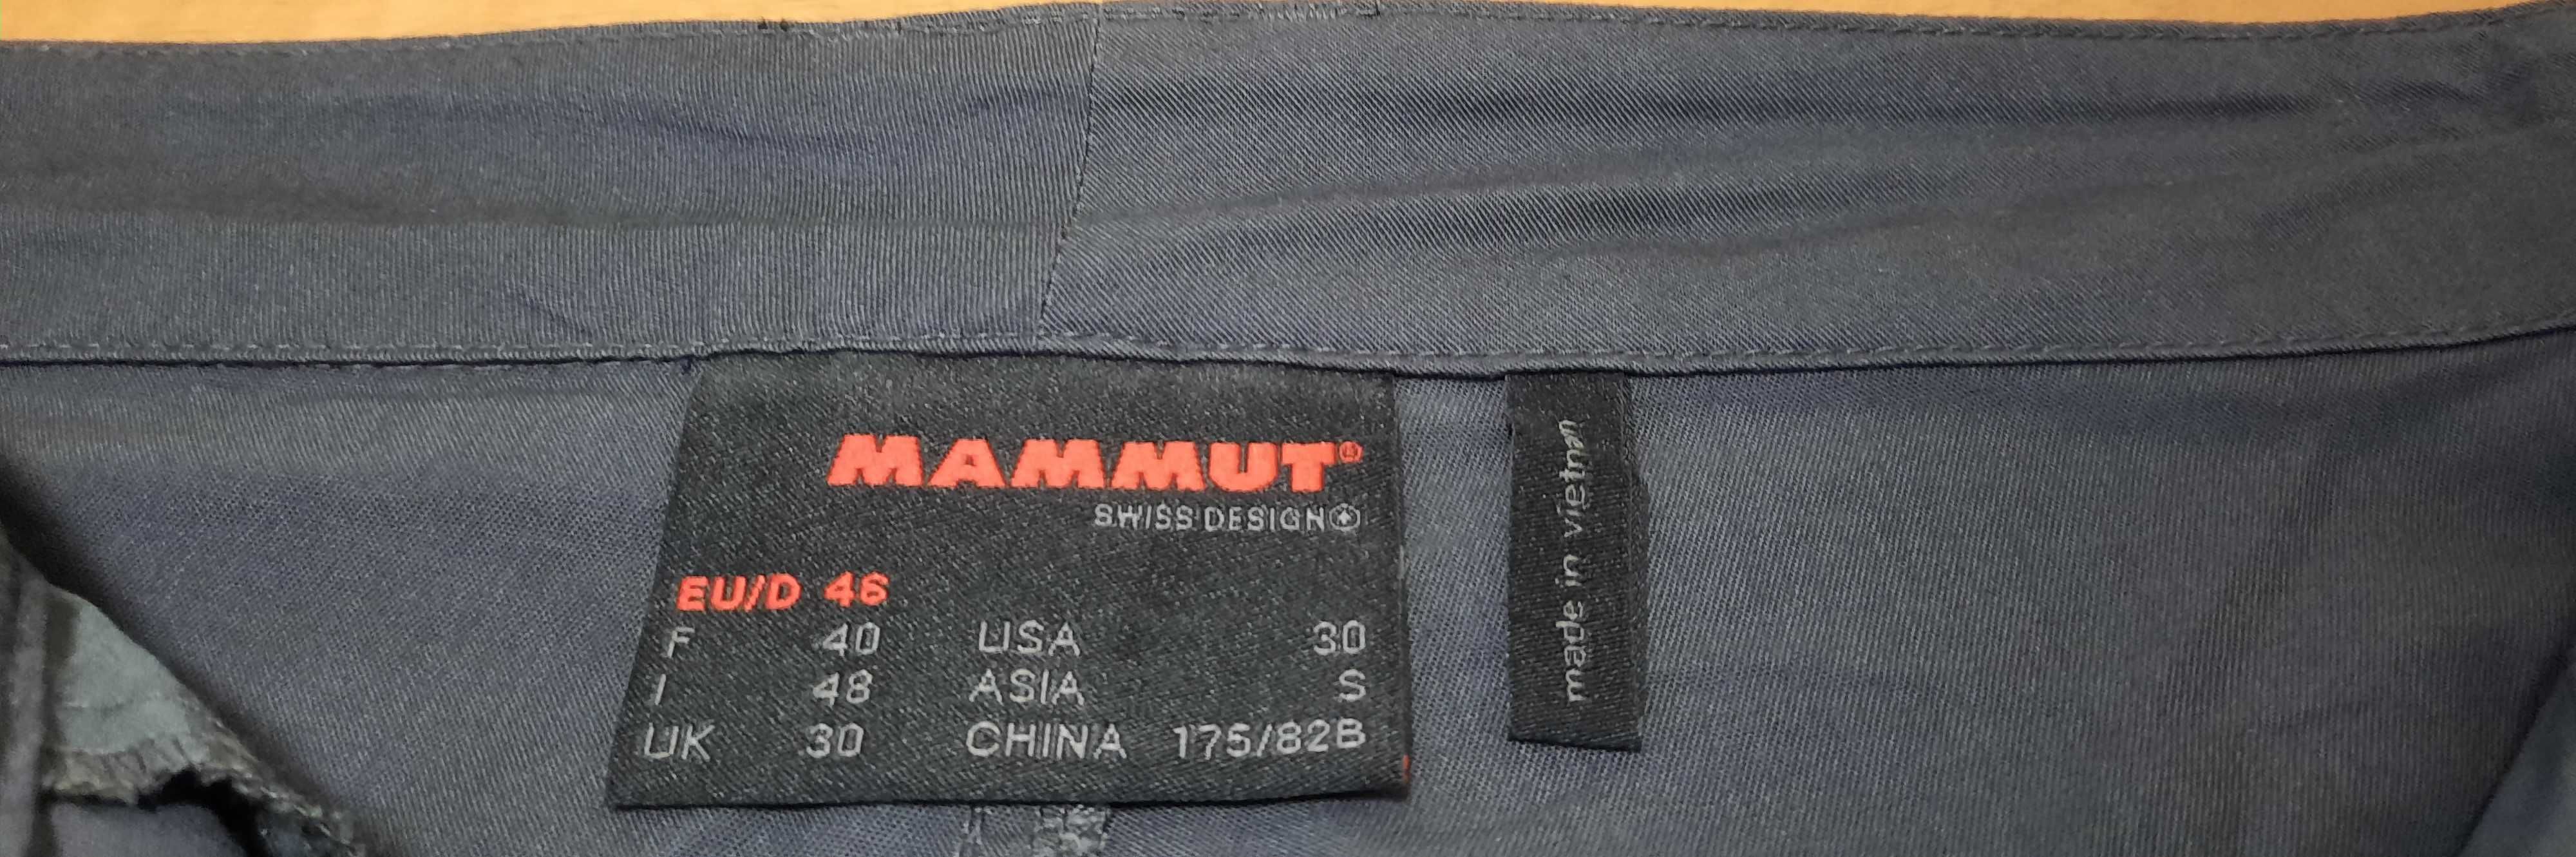 Mammut®-Made in Vietnam